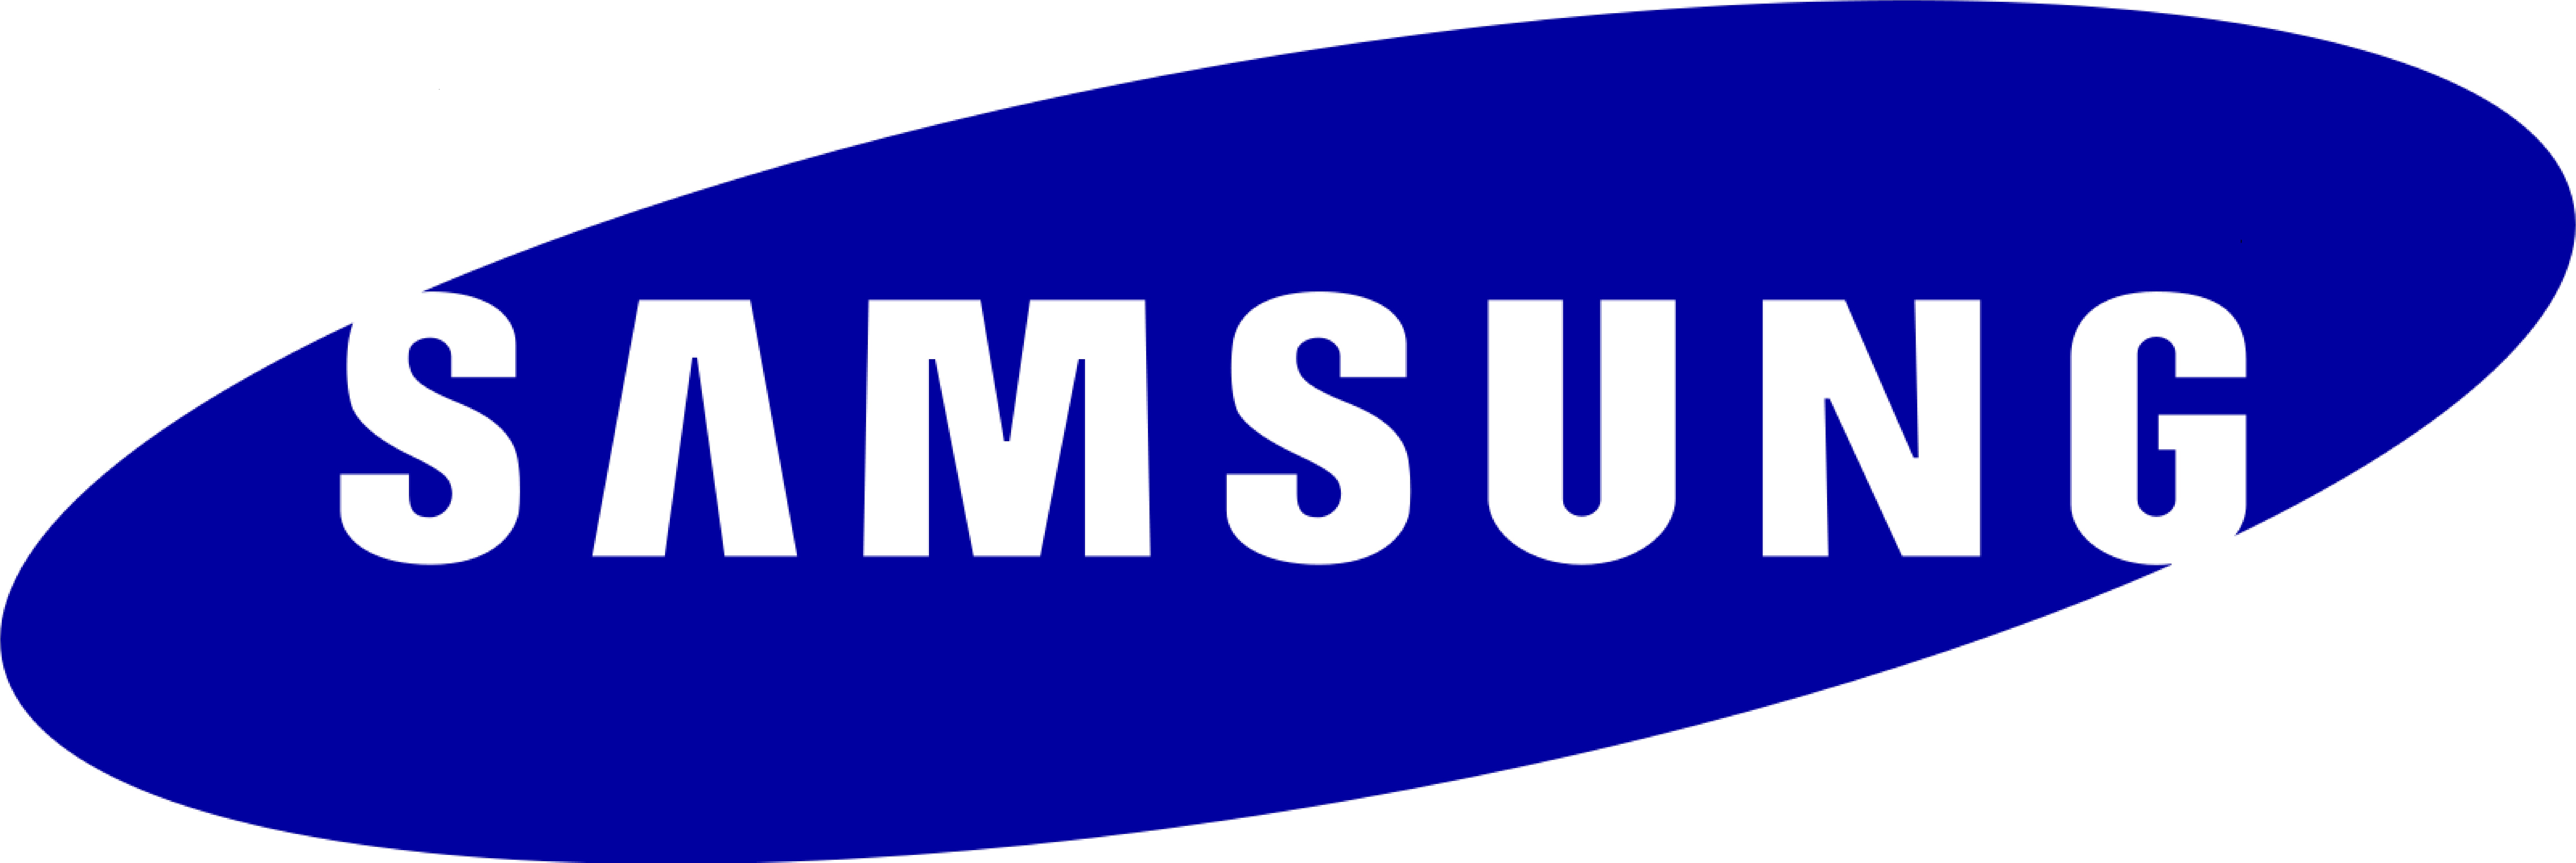 Samsung 4k Ultra HD Wallpaper